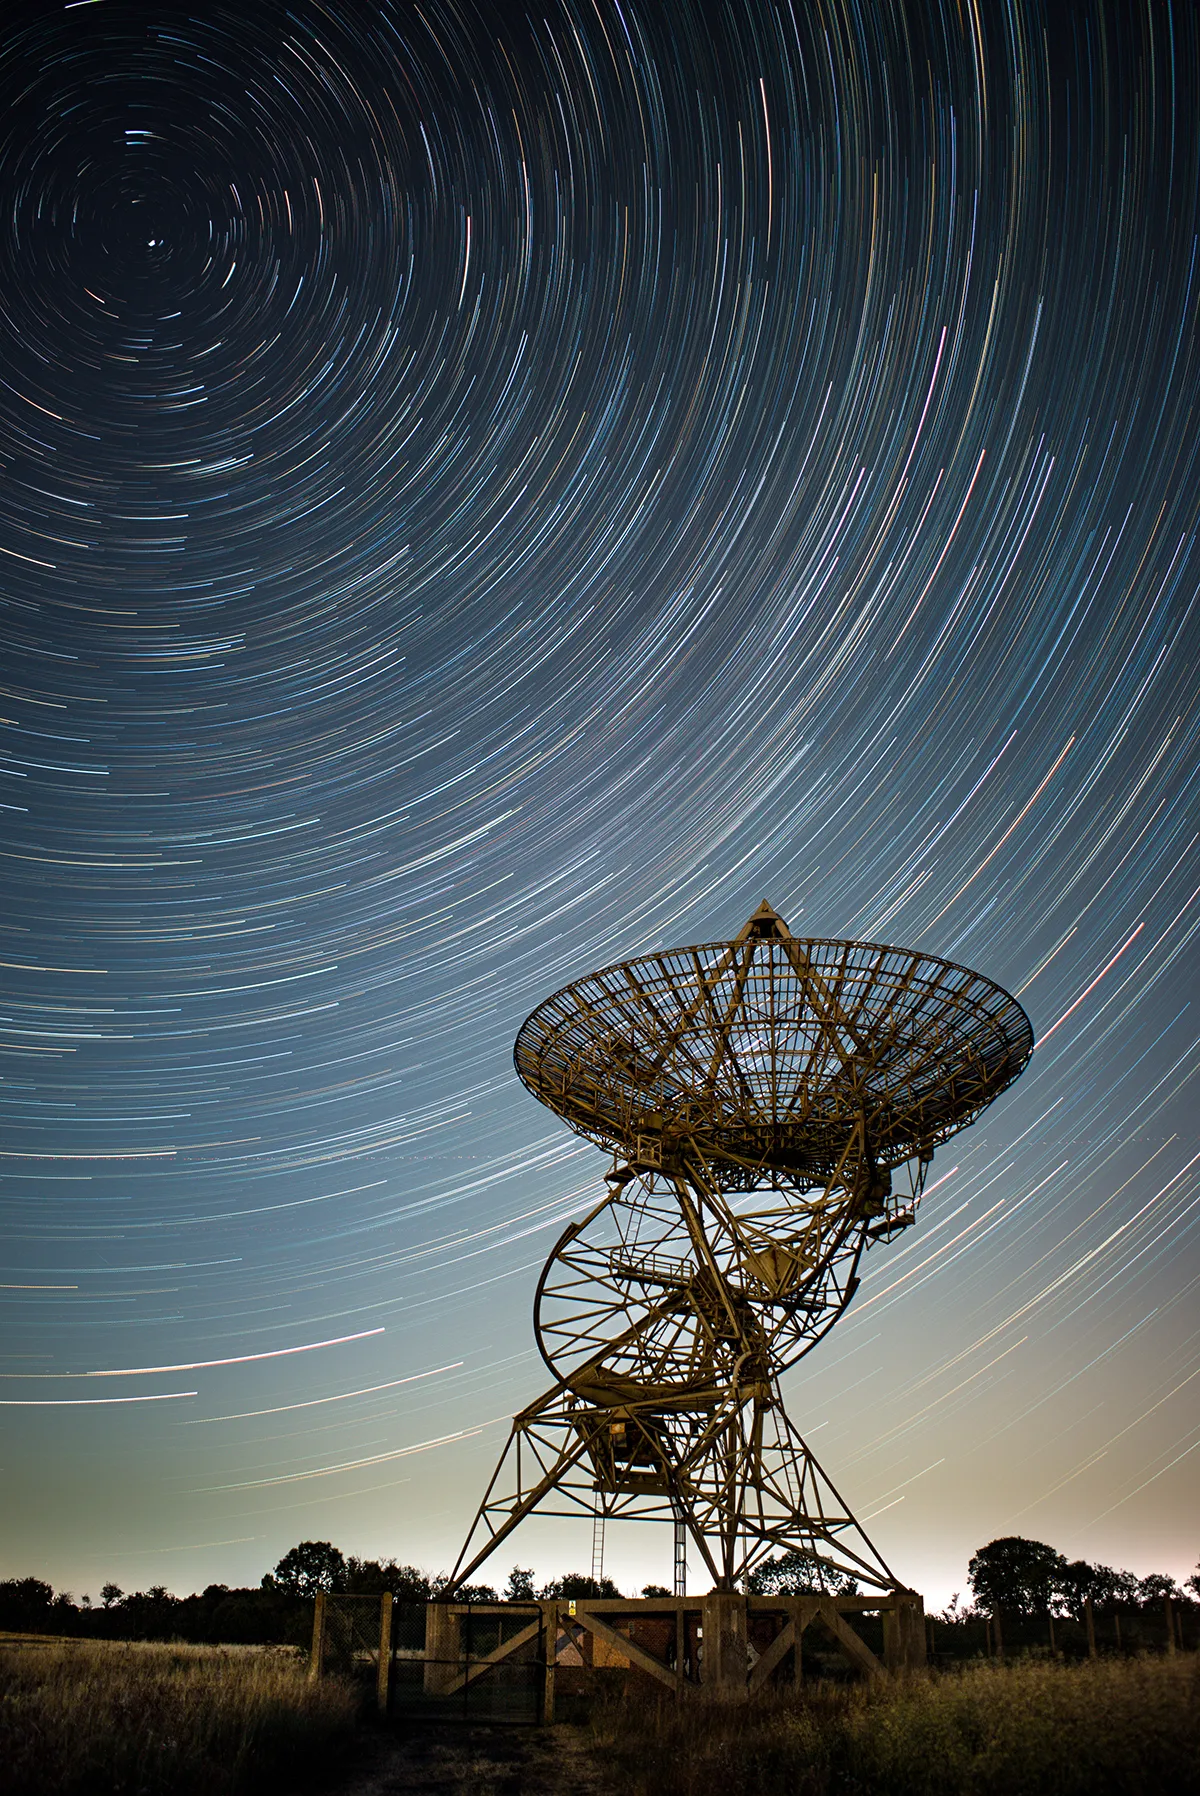 Radio Polaris, by João Yordanov Serralheiro, Mullard Radio Astronomy Observatory, Cambridge, United Kingdom Category: Stars & Nebulae Equipment: Sony ILCE-7M2 camera, 28 mm f/2, ISO 200, 124 x 30-second exposures